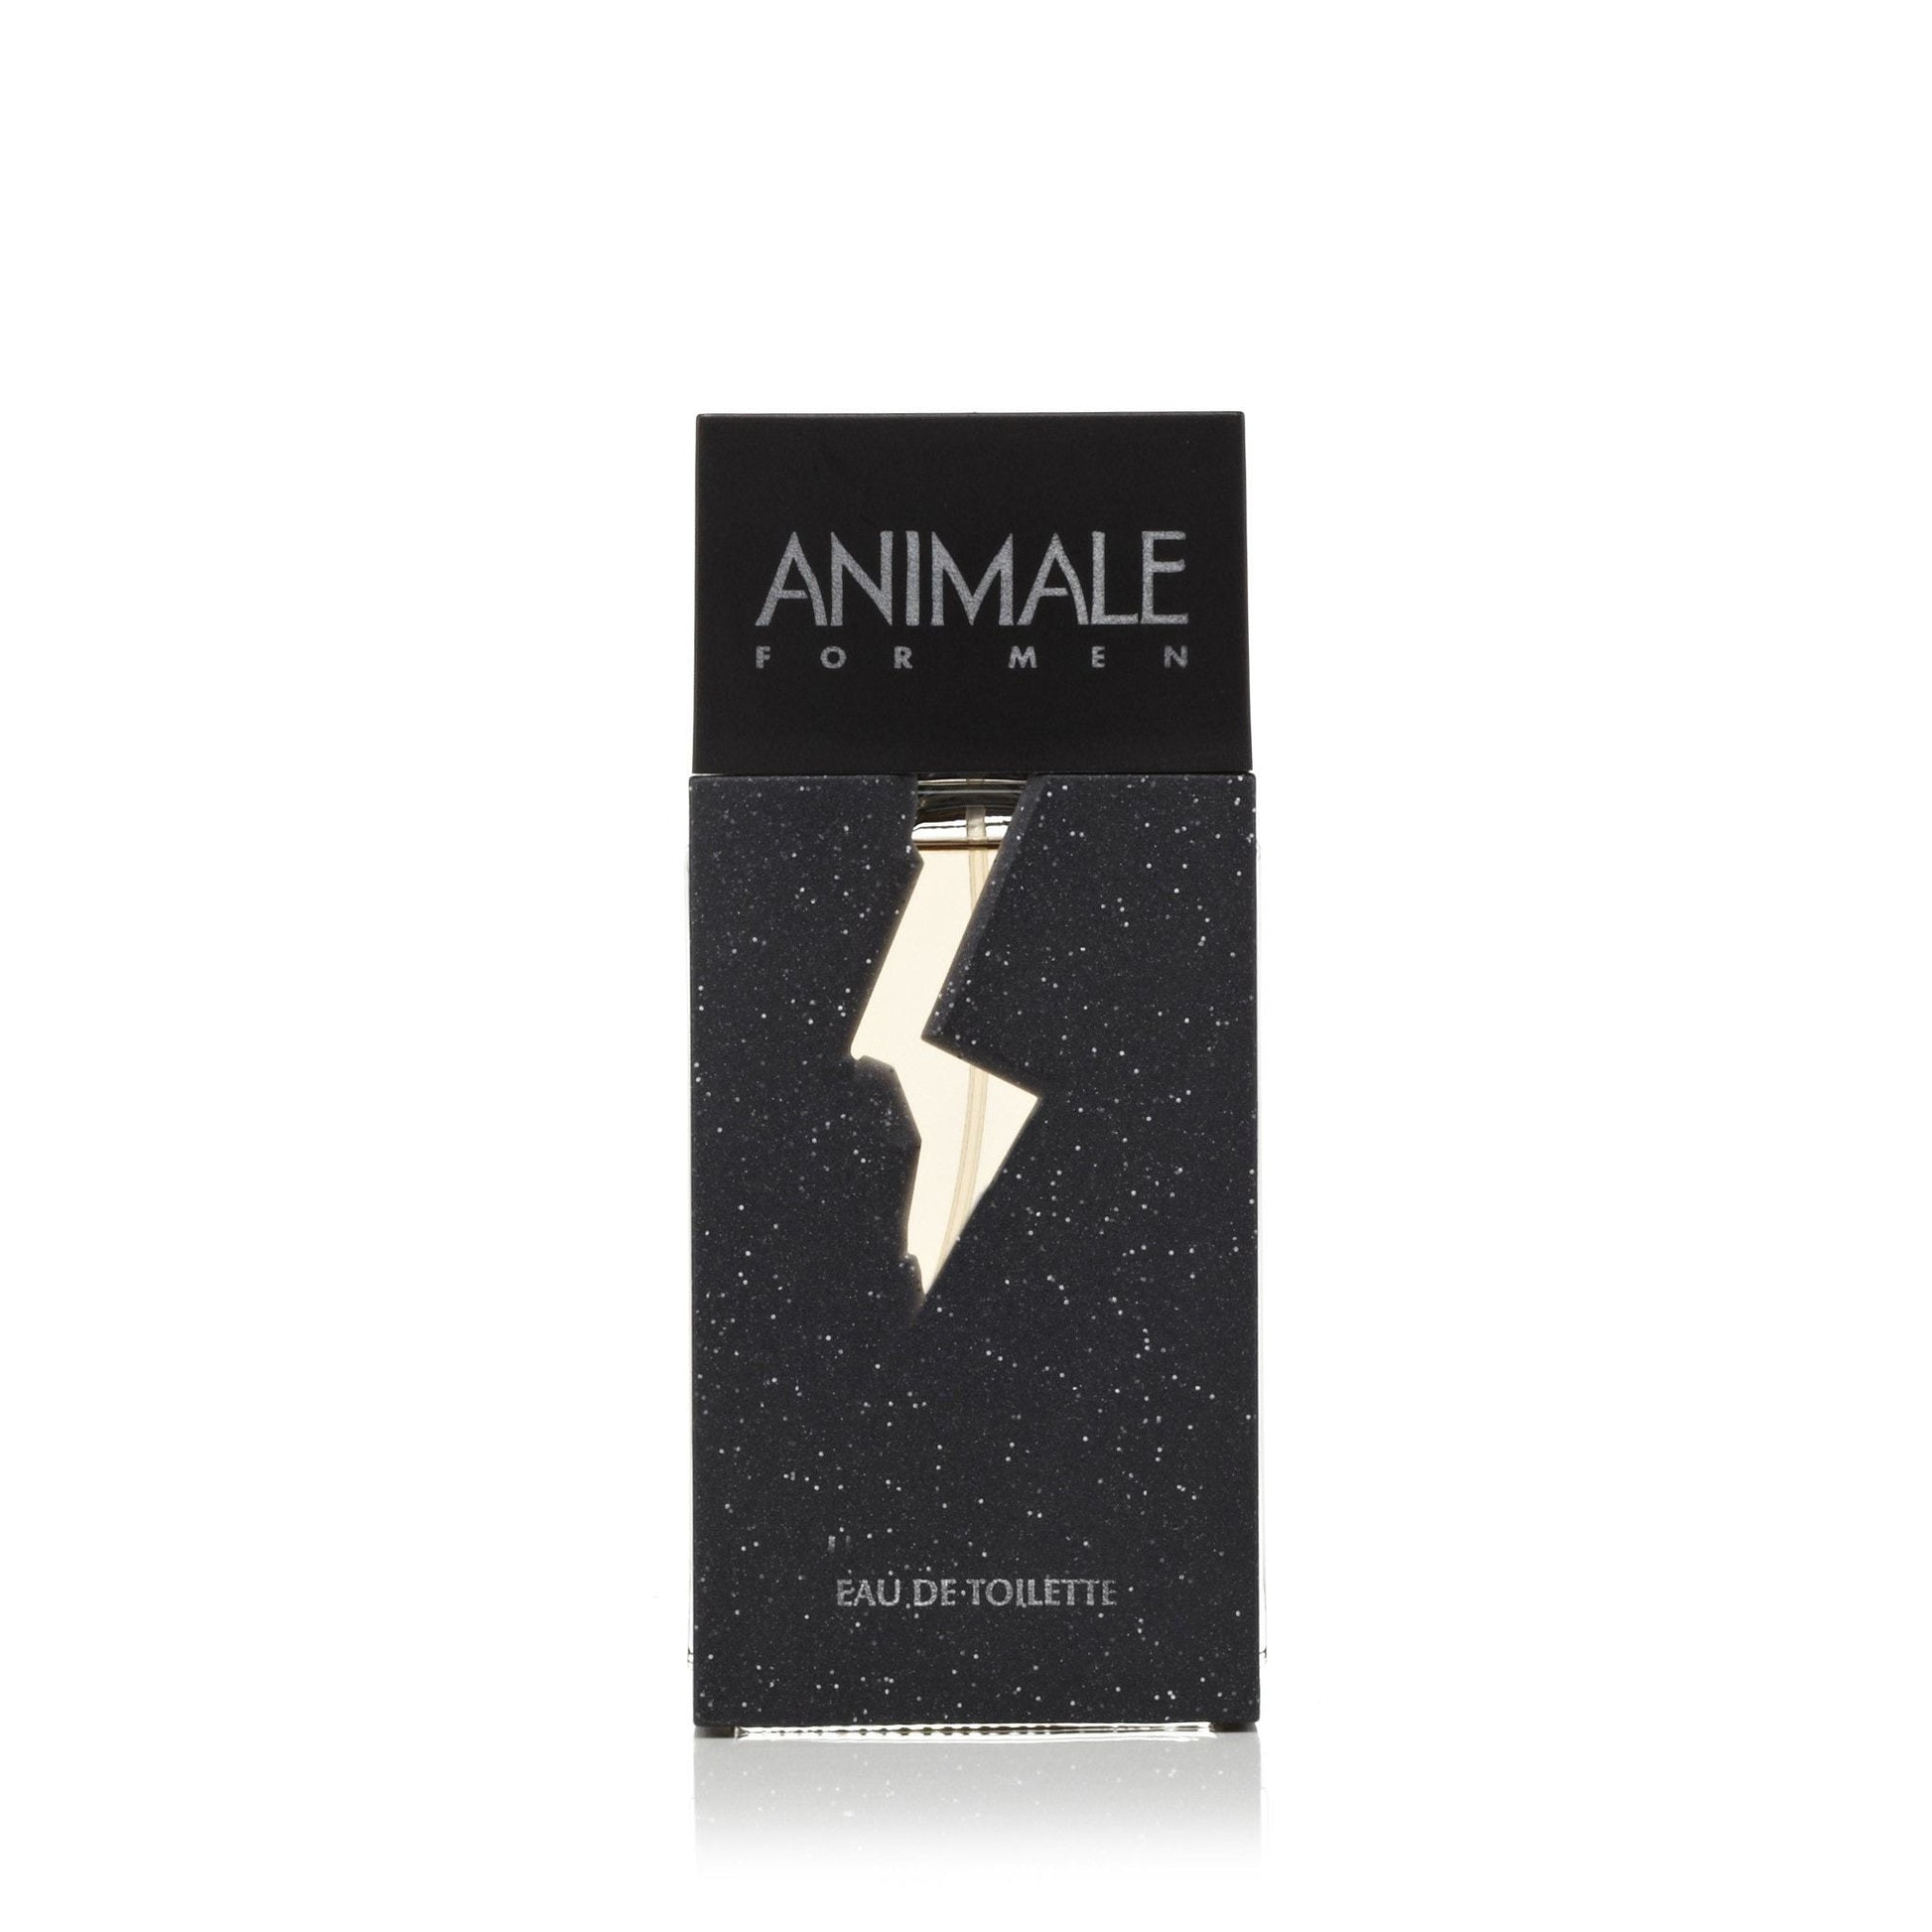 Animale Eau de Toilette Spray for Men by Animale, Product image 1